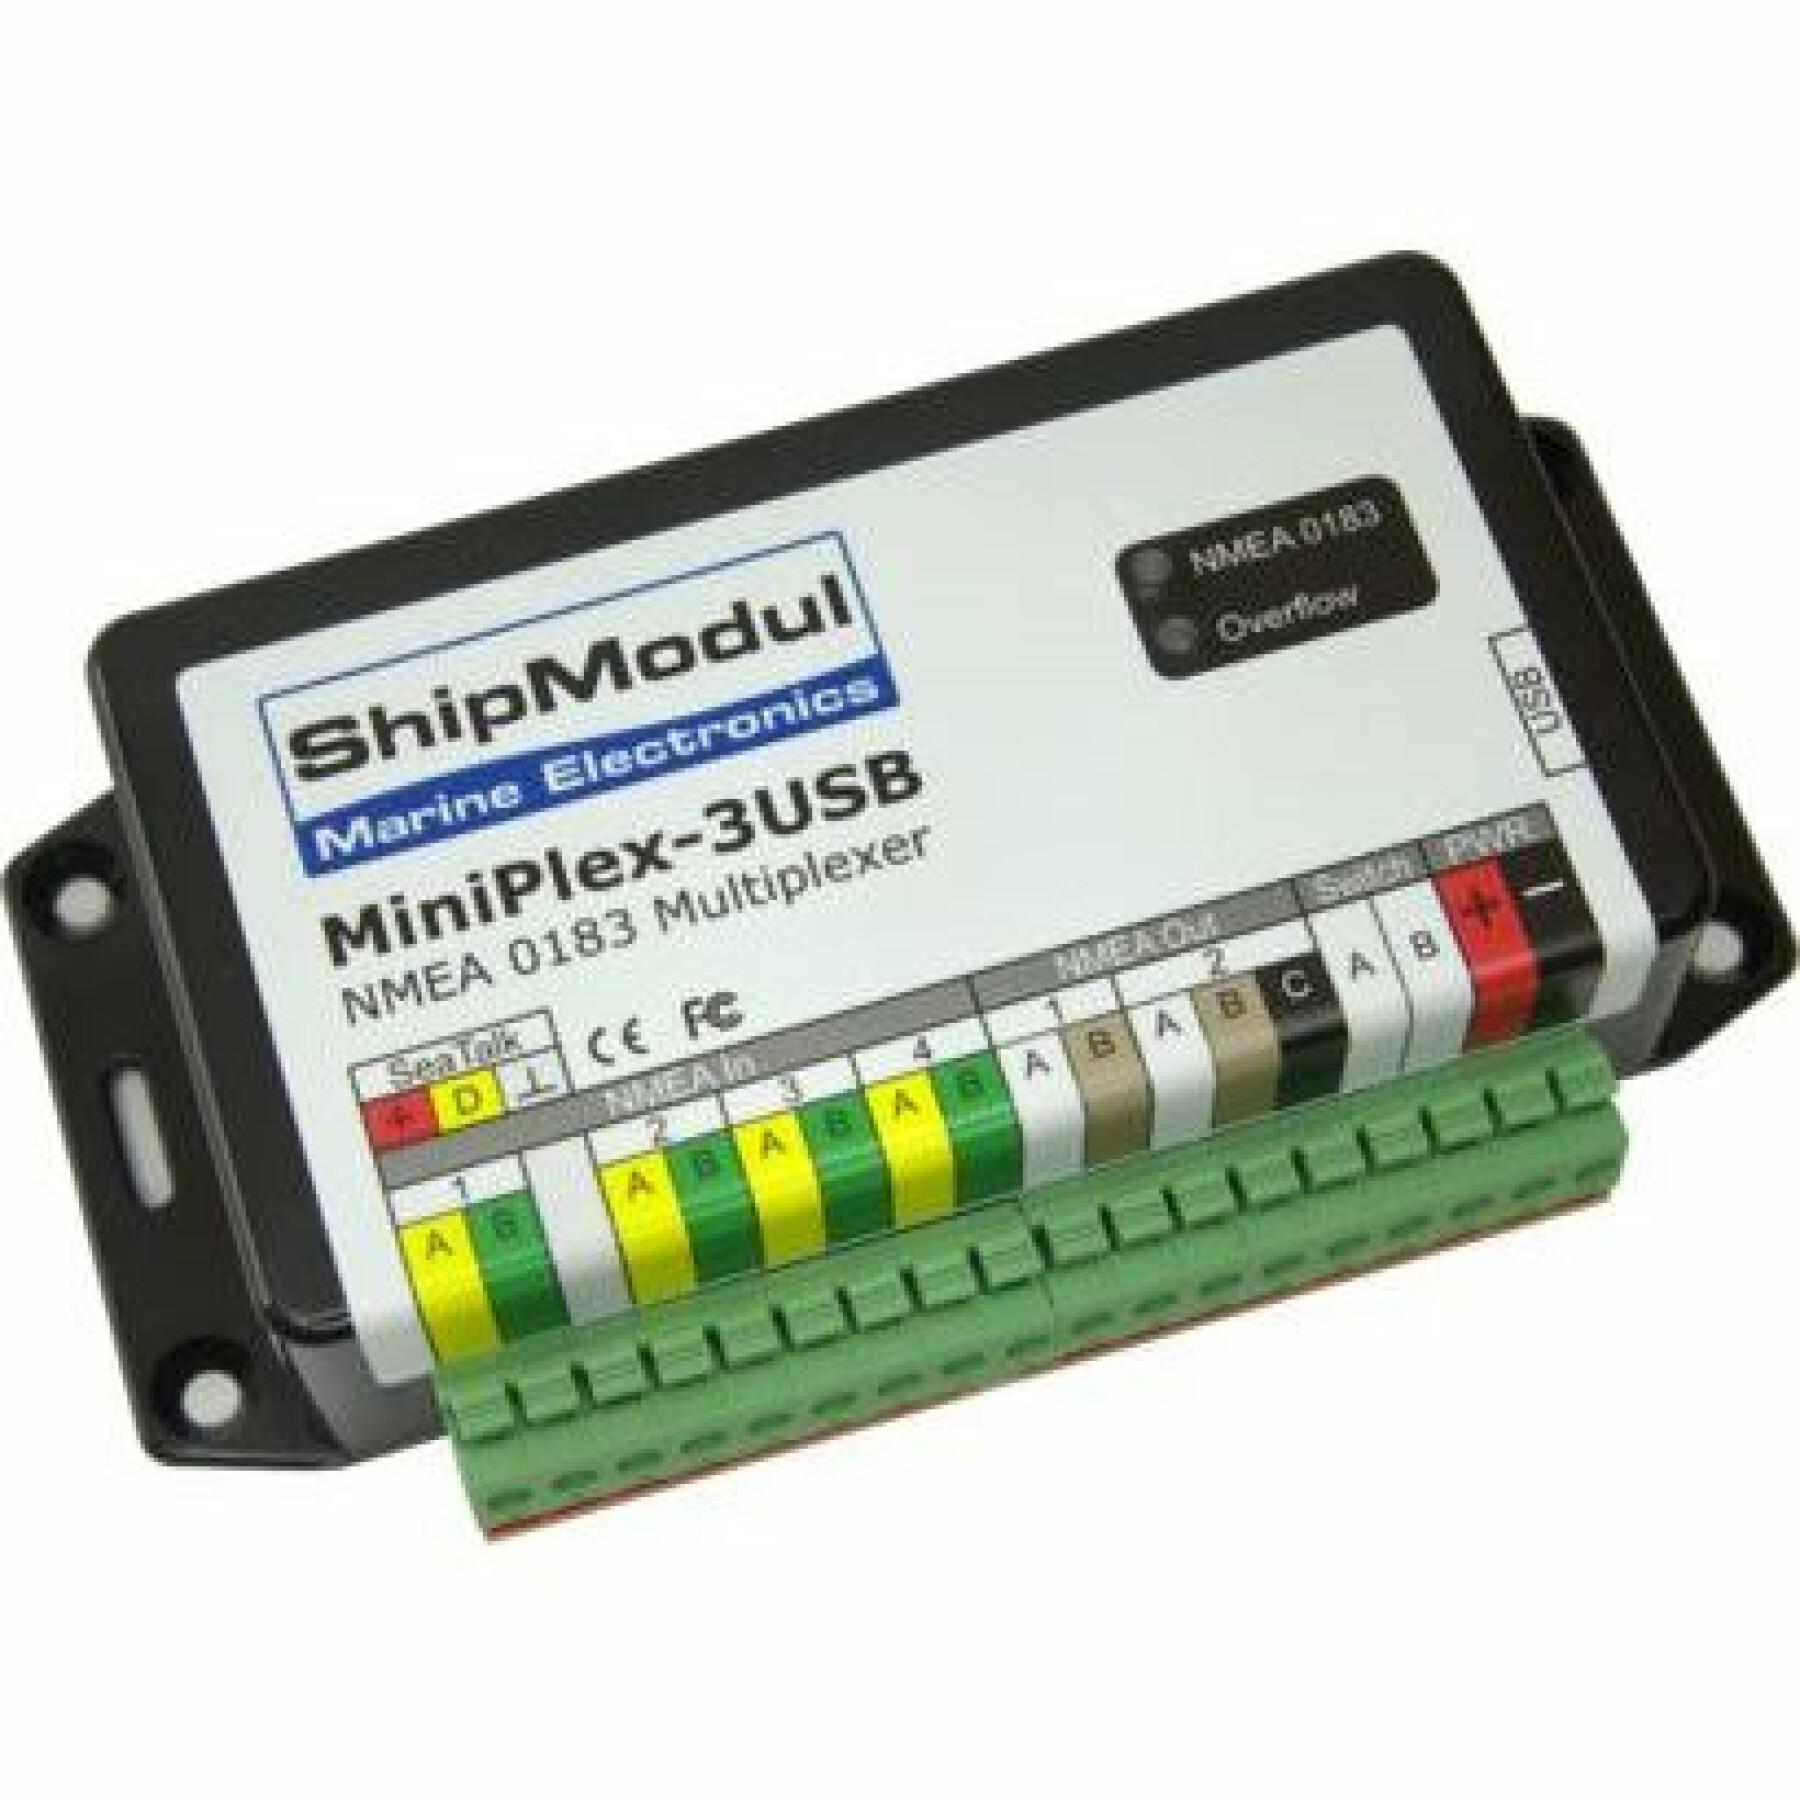 Multiplexer usb versie ShipModul Miniplex-3USB